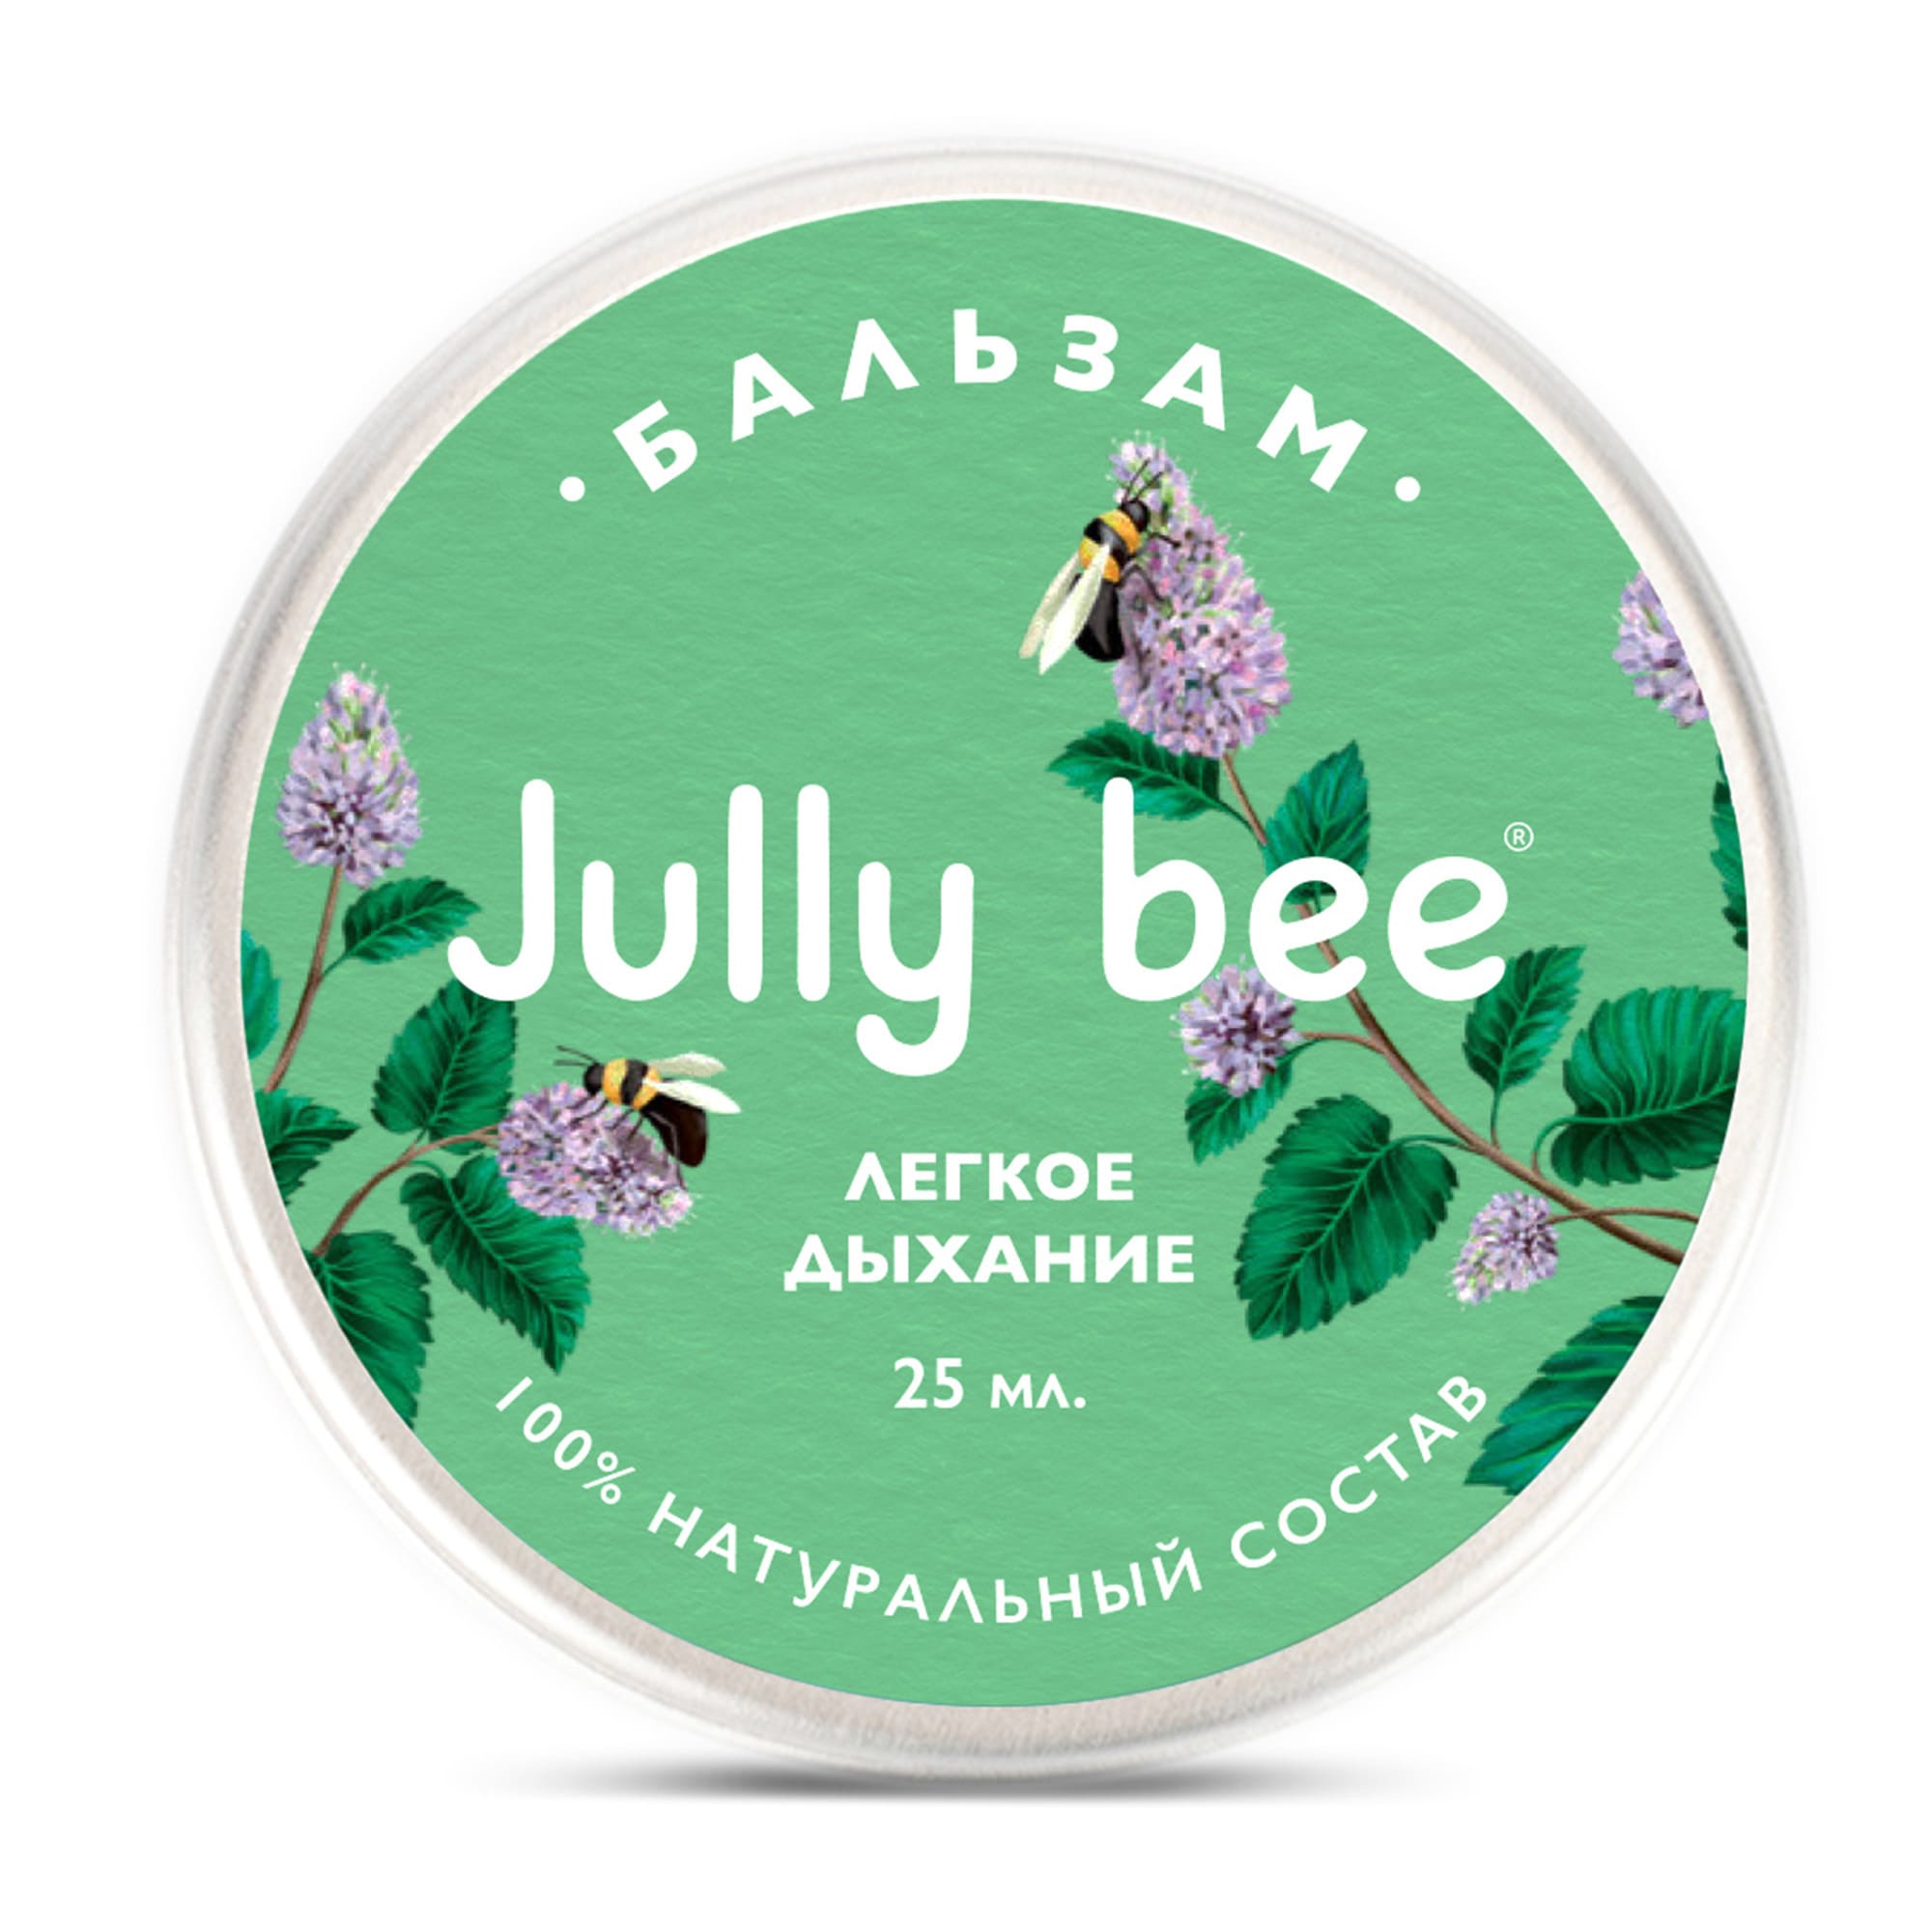 Бальзам для тела Jully Bee легкое дыхание, лечебный, 25 мл wattana herb тайский желтый бальзам для тела 50